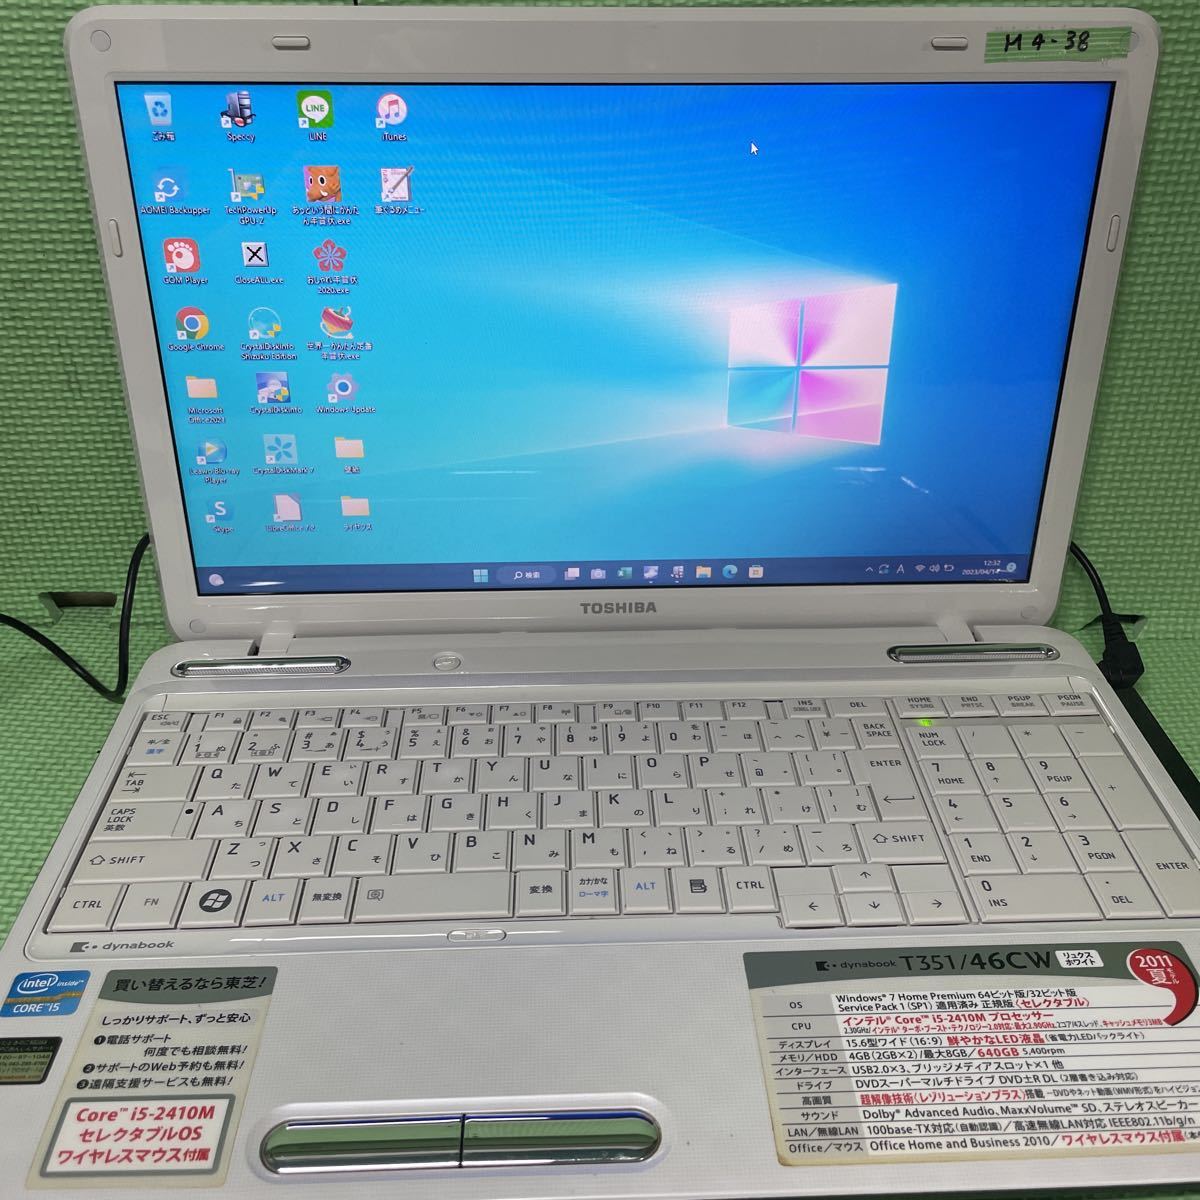 【M4-38】Windows11/新品SSD240GB【TOSHIBA dynabook T351/46CW】Core i5/メモリ4GB/Office2021/Wifi/筆ぐるめ/DVDドライブ_画像2